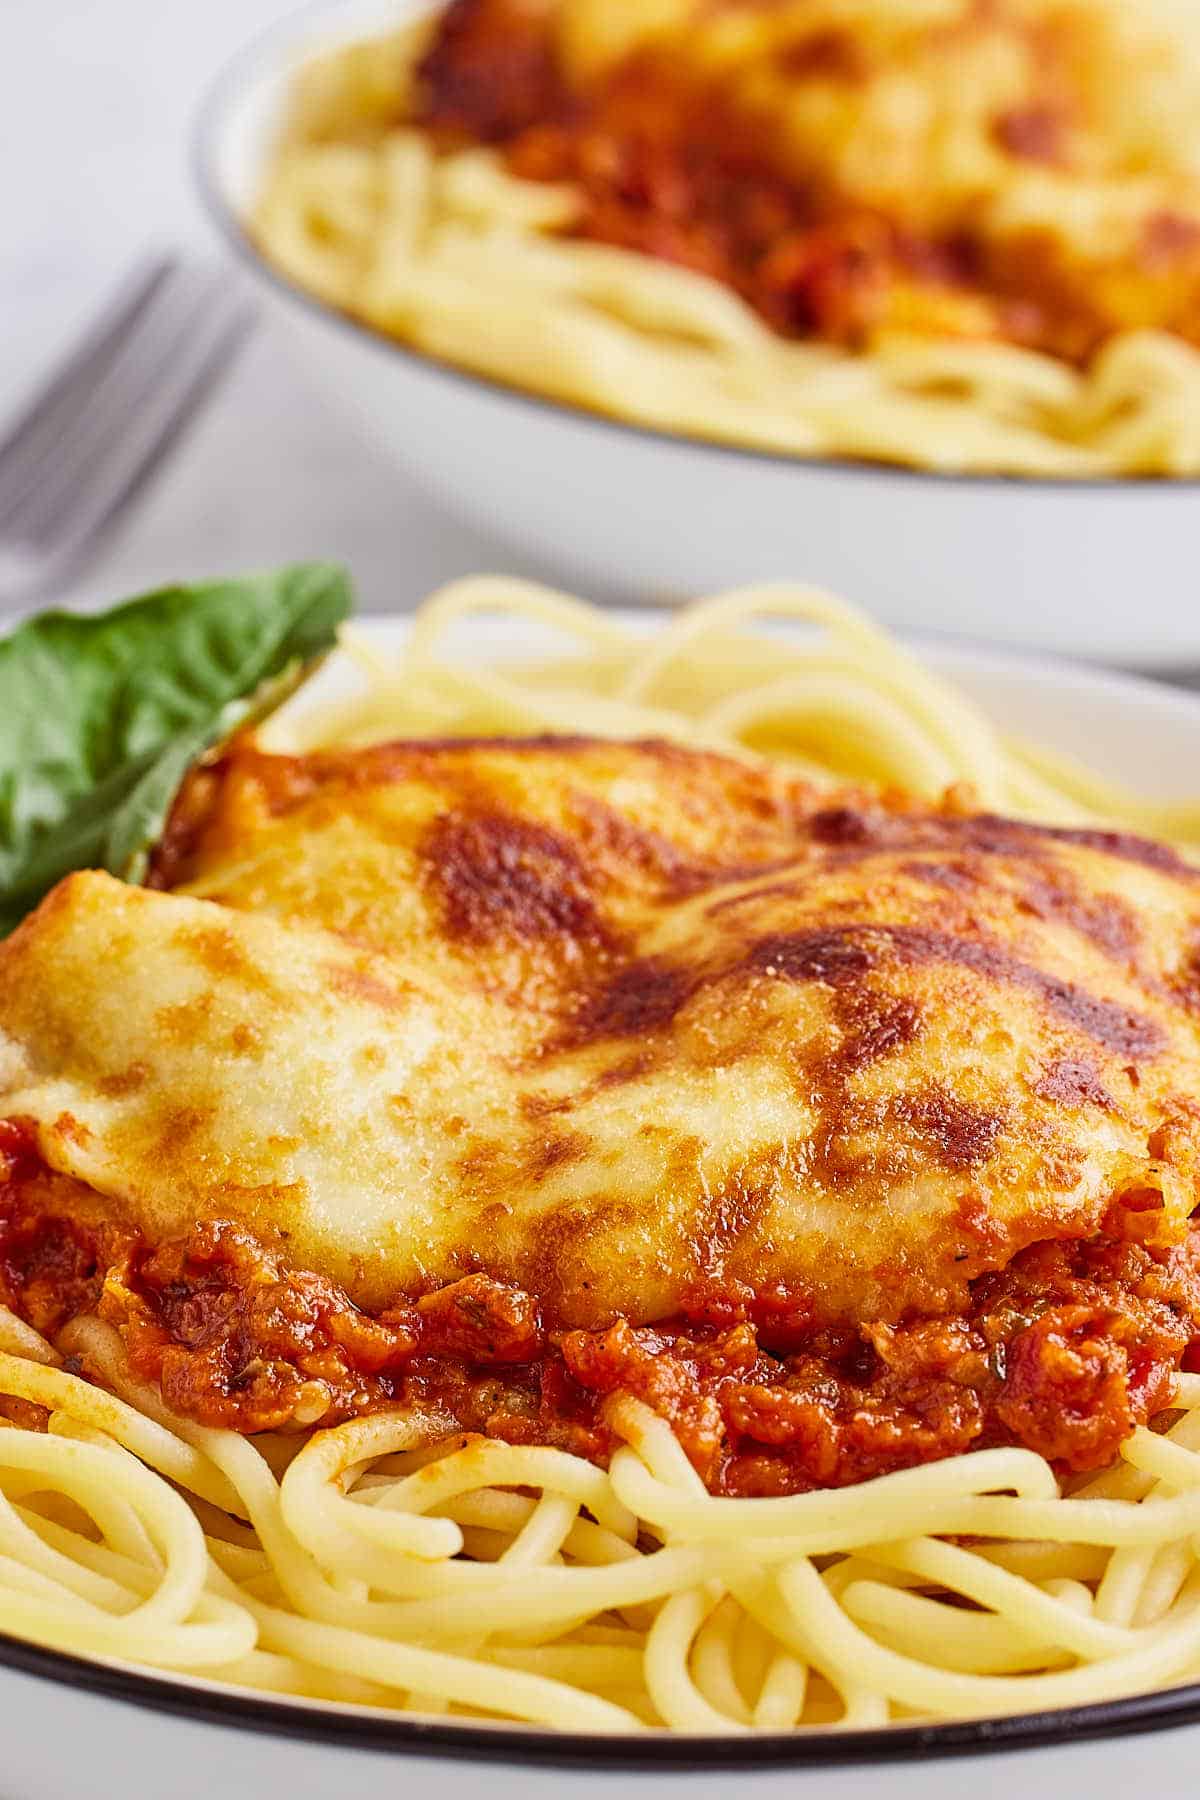 Closeup of a Chicken Parmesan served on spaghetti pasta.